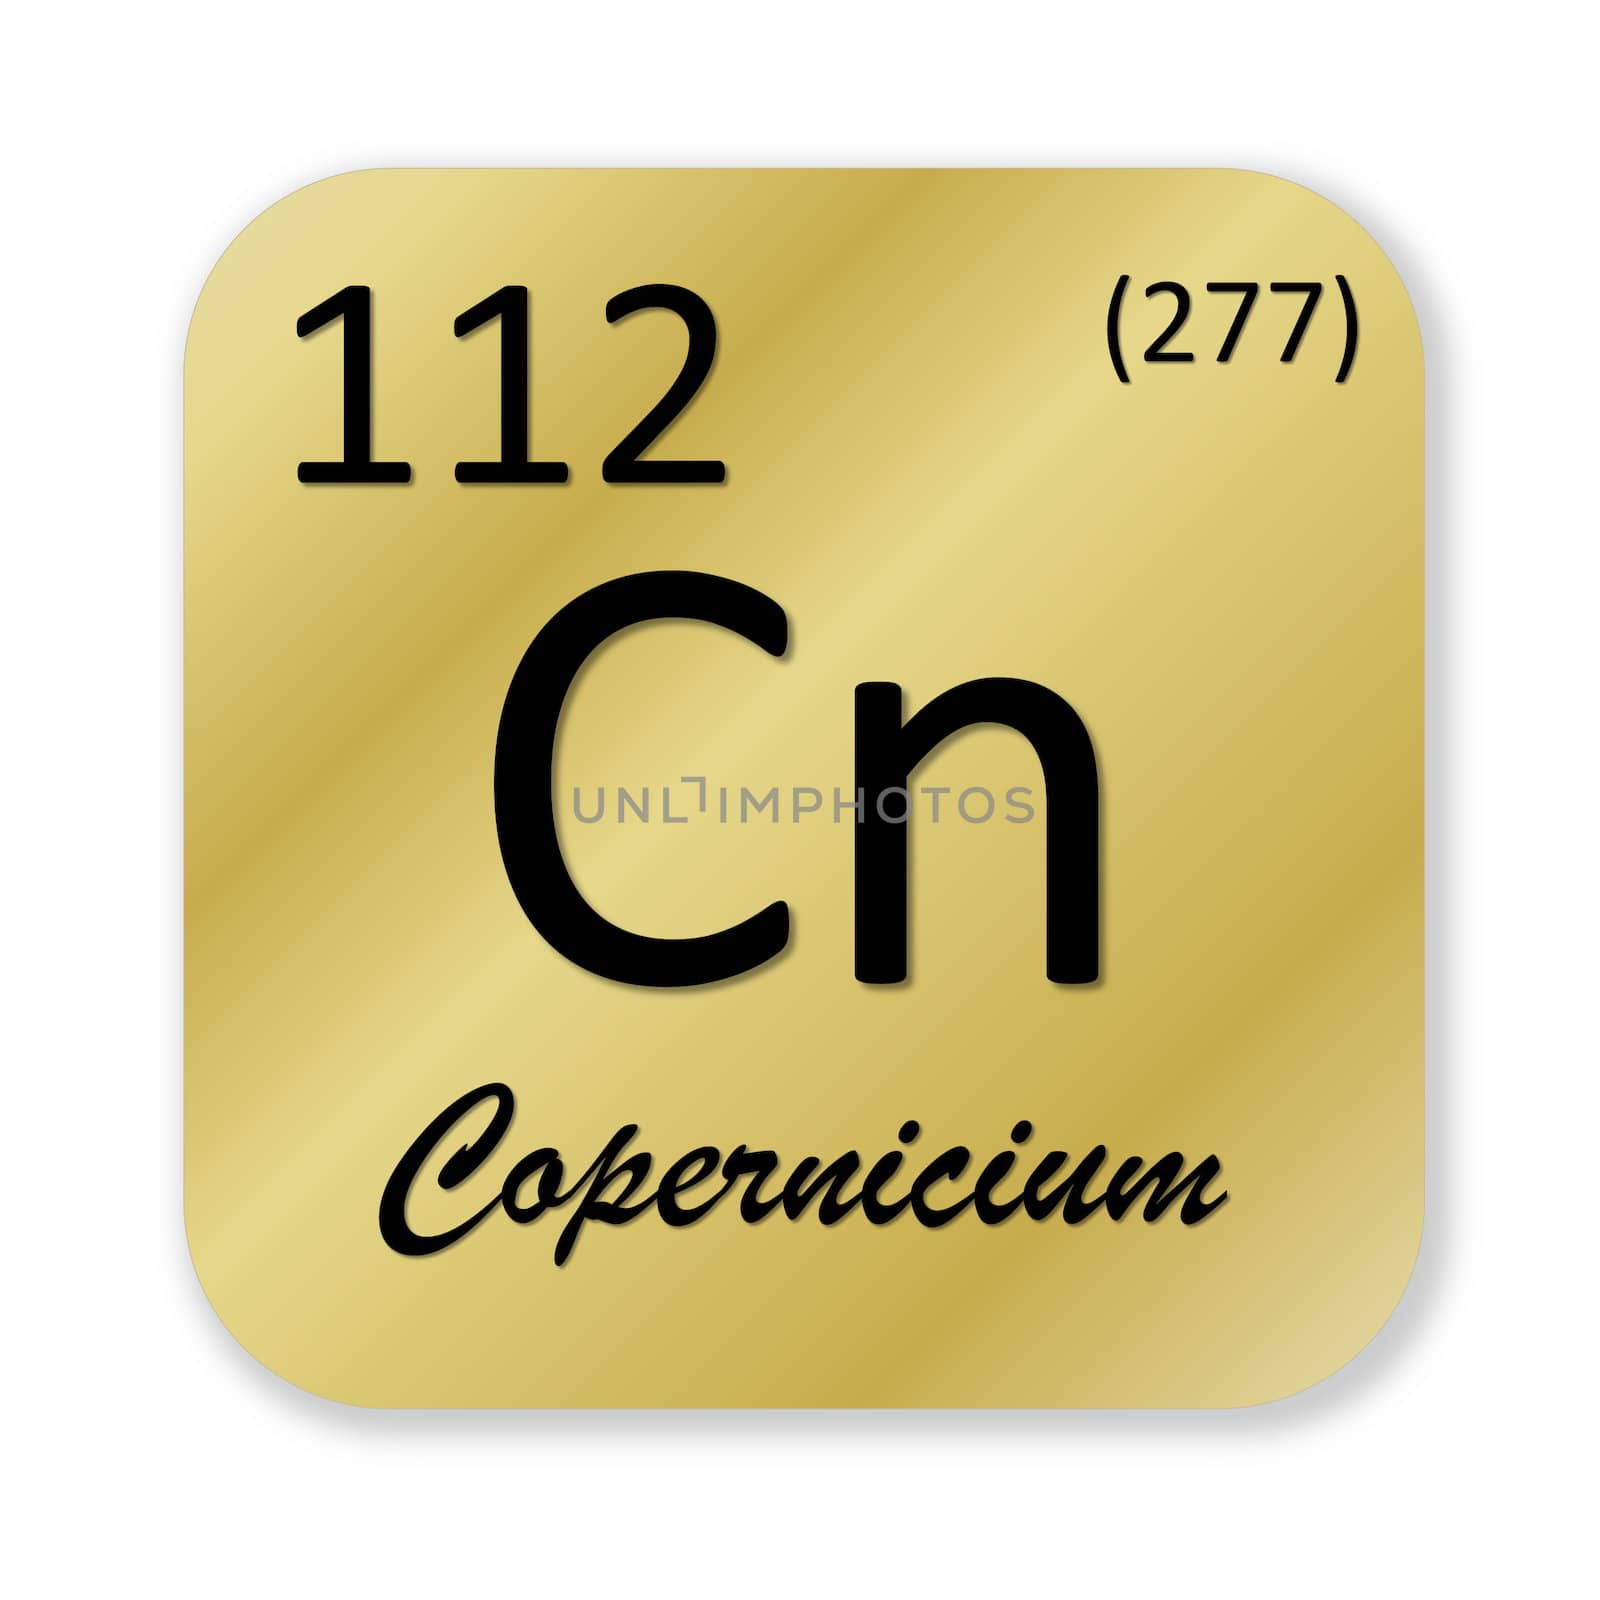 Black copernicium element into golden square shape isolated in white background